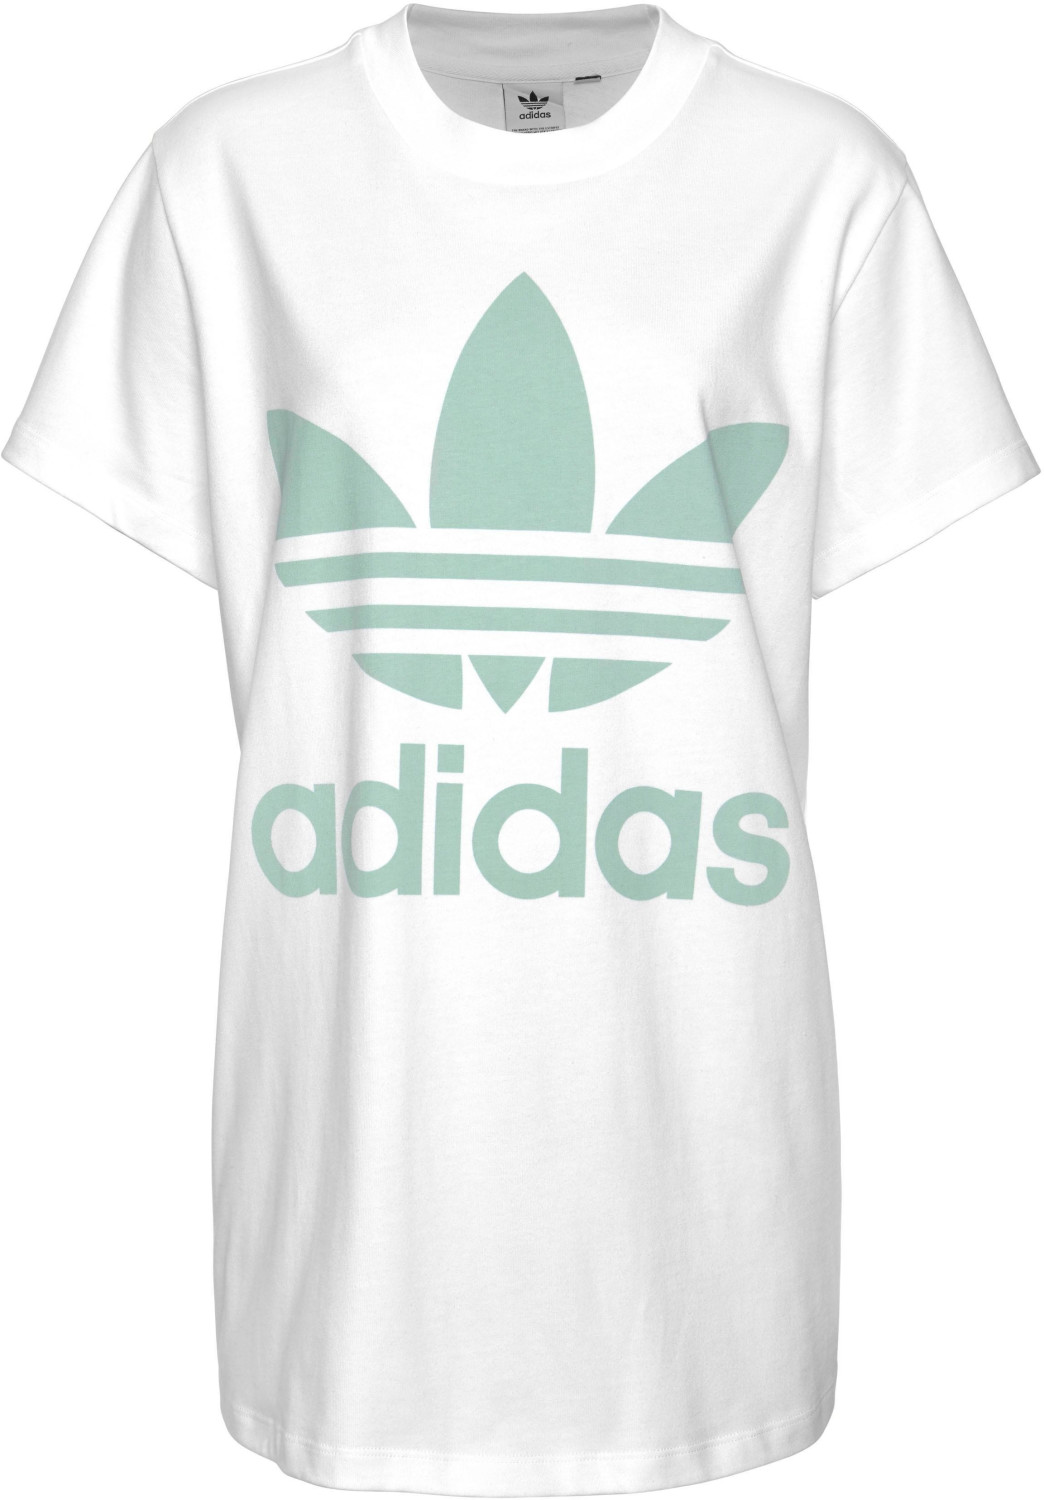 Adidas Oversize Trefoil T-Shirt white/blush green